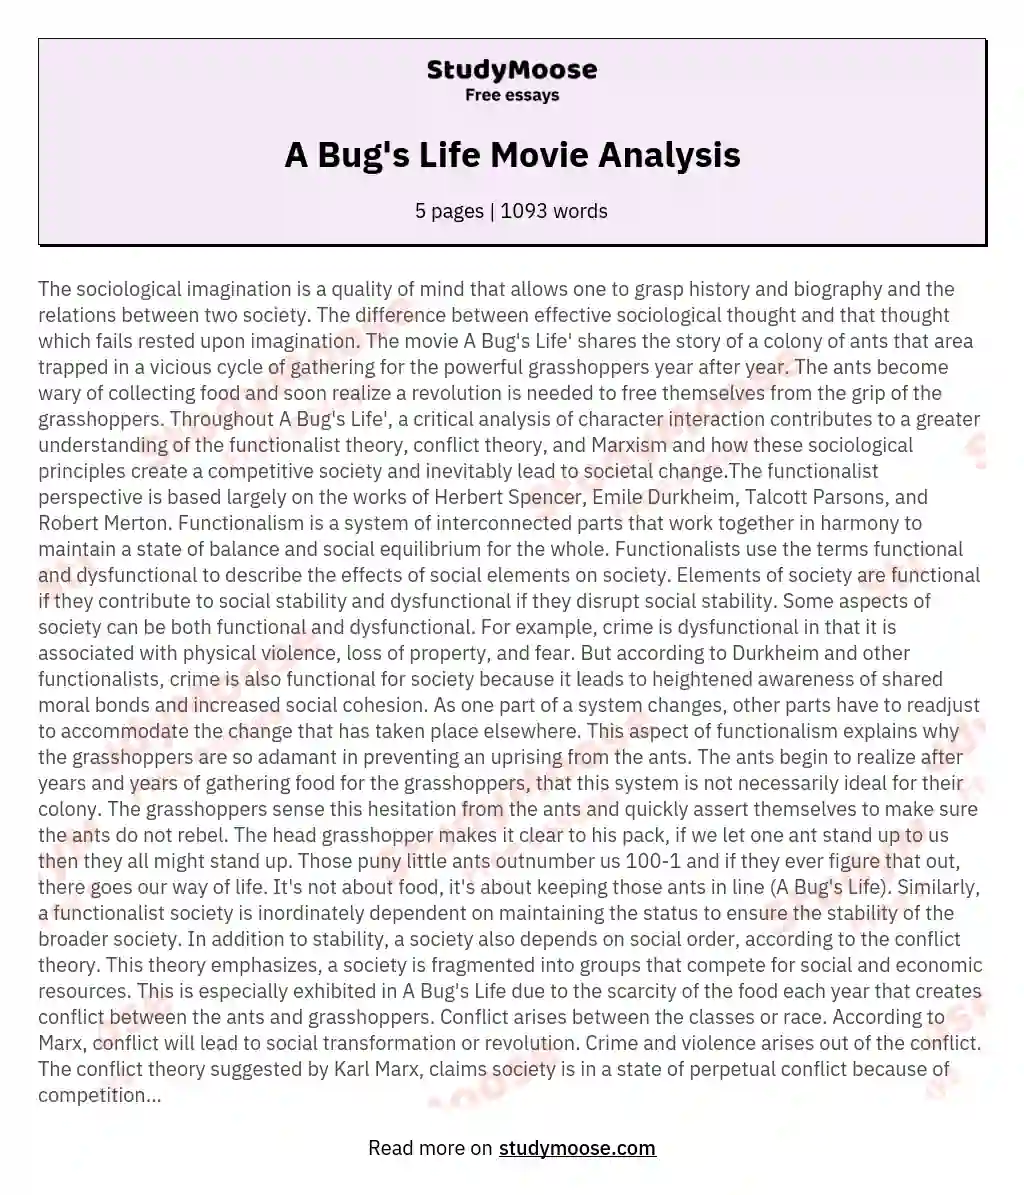 A Bug's Life Movie Analysis essay